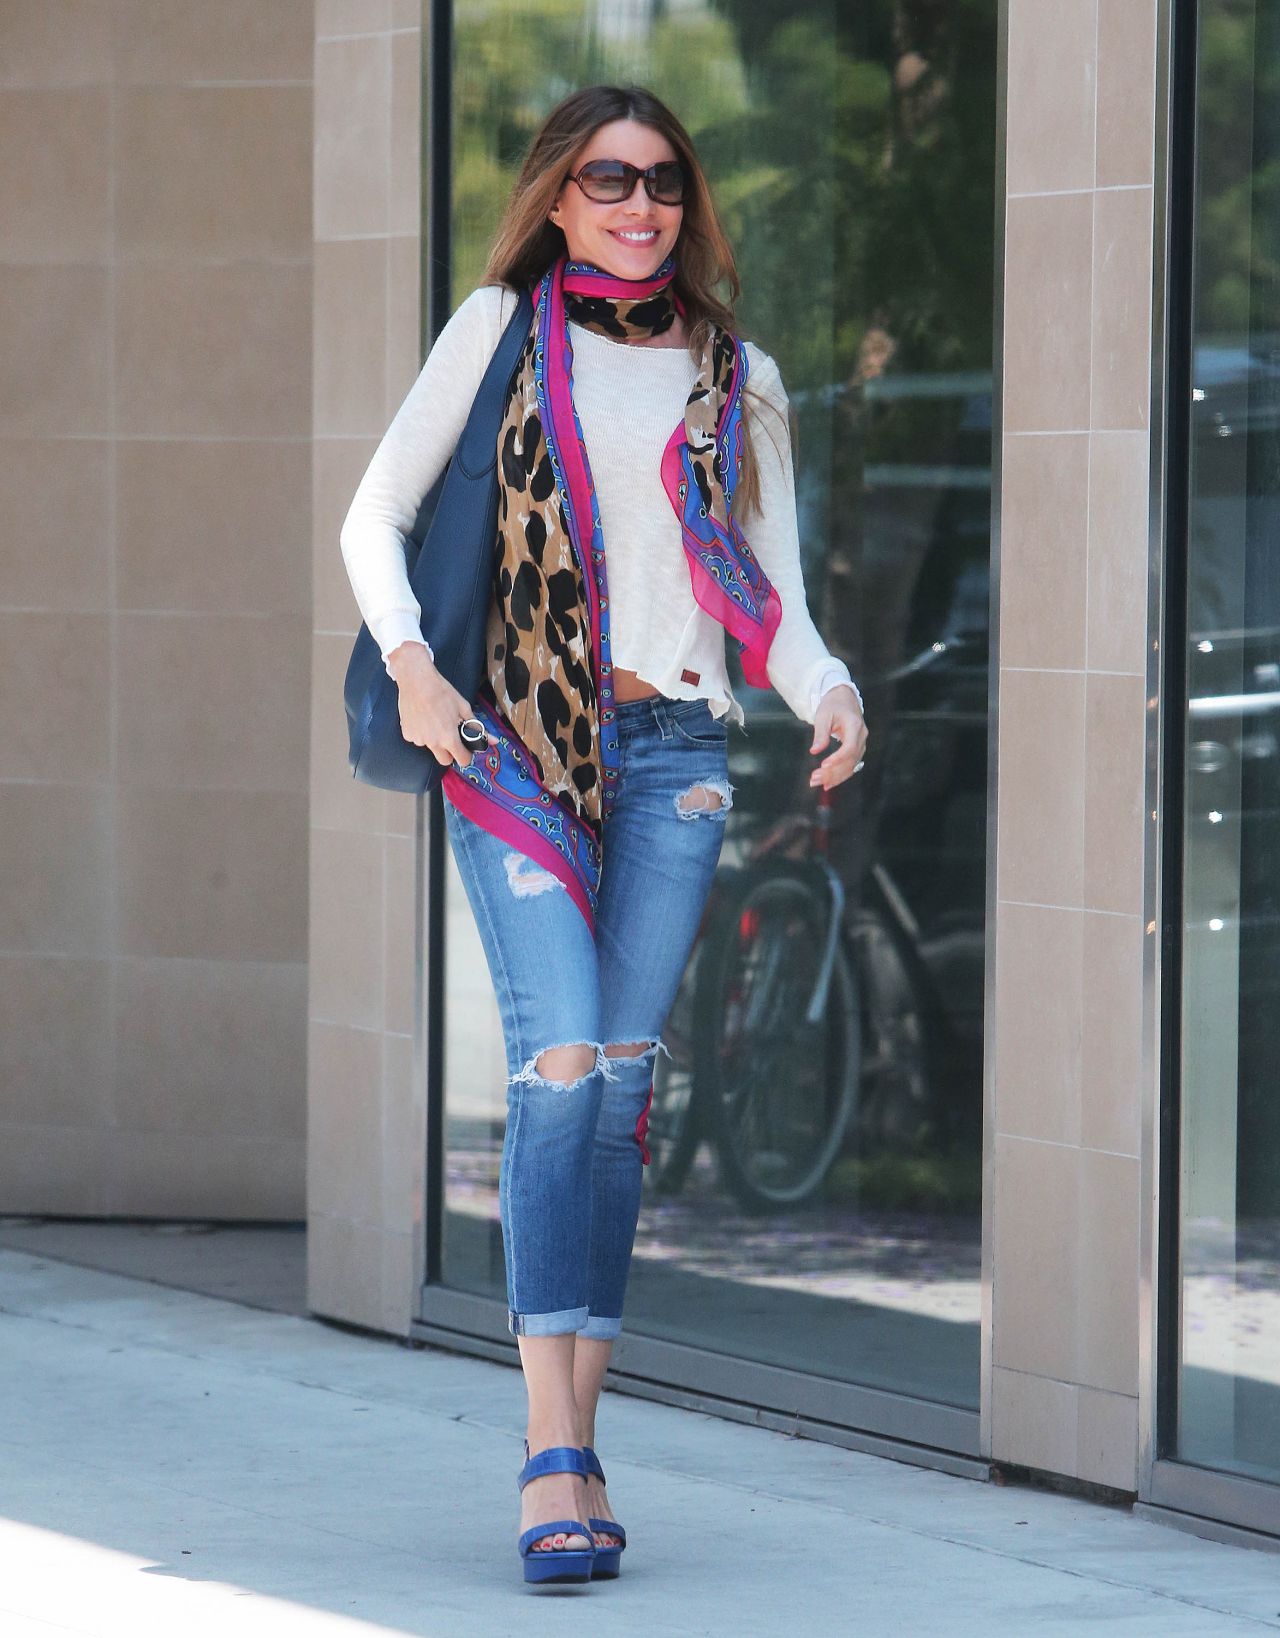 Sofia Vergara West Hollywood April 17, 2015 – Star Style